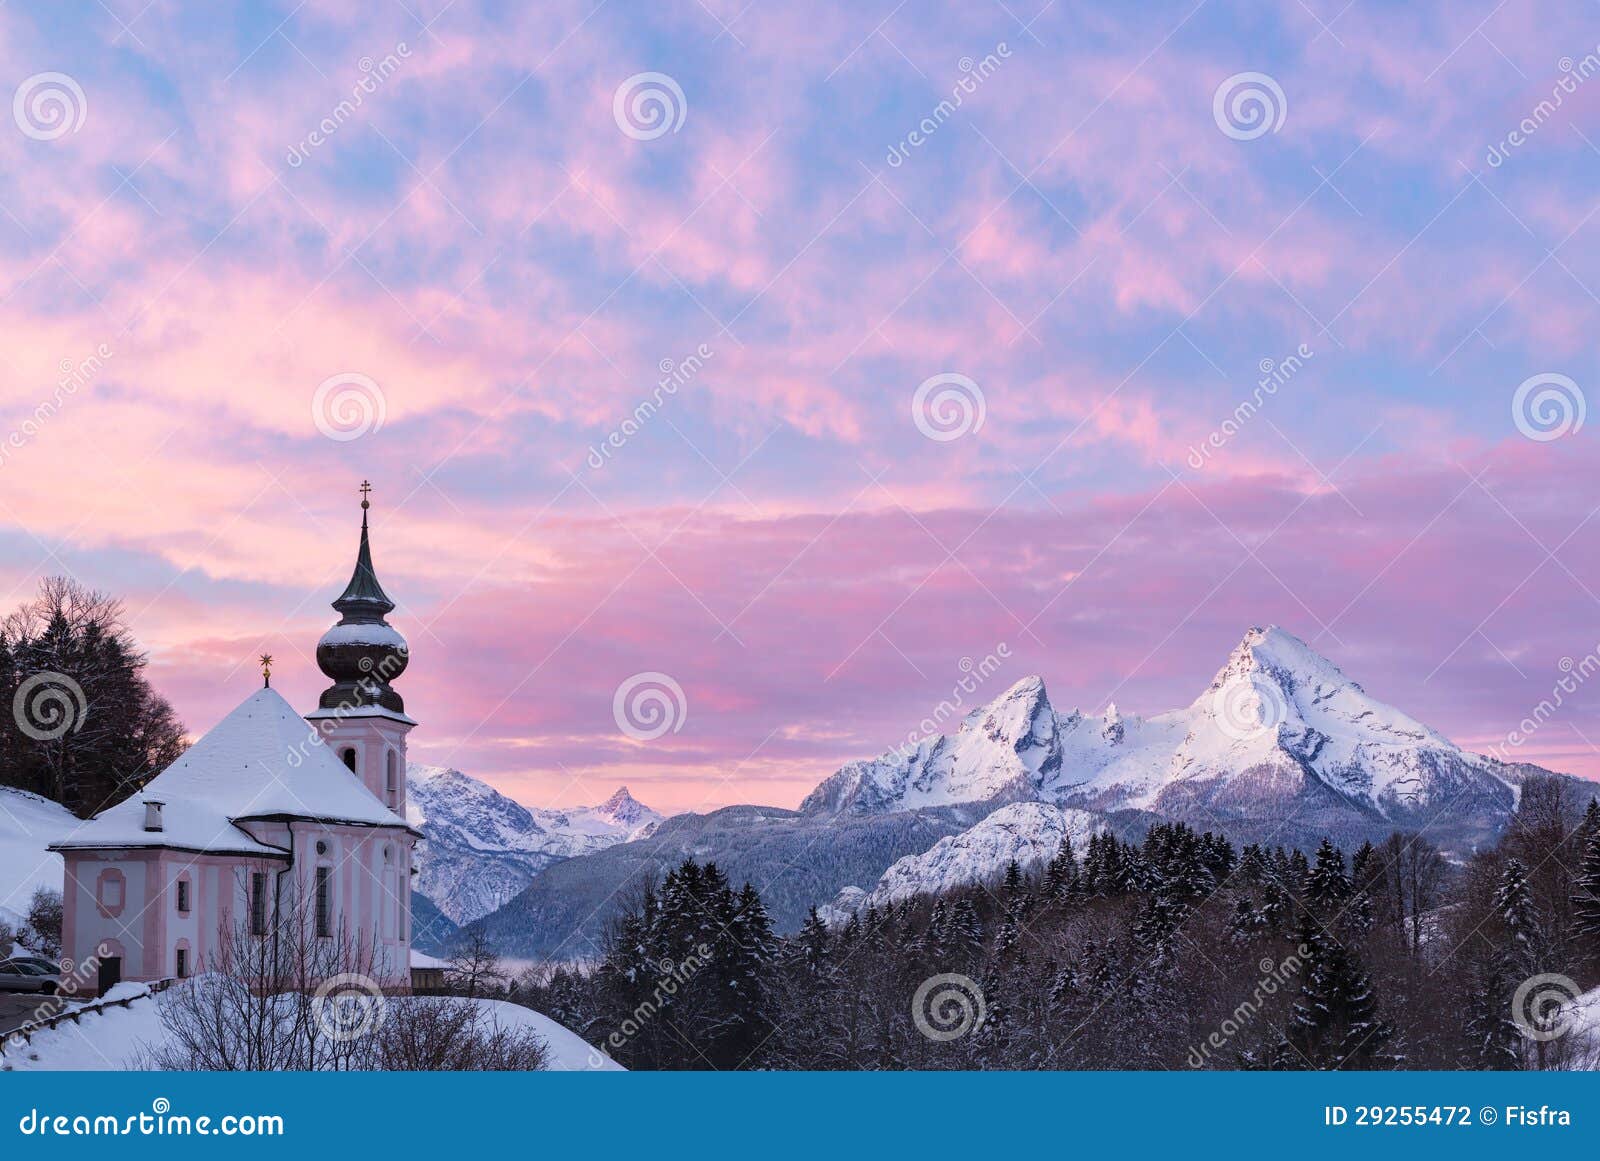 watzmann at sunset with church, bavaria, berchtesgaden, germany alps